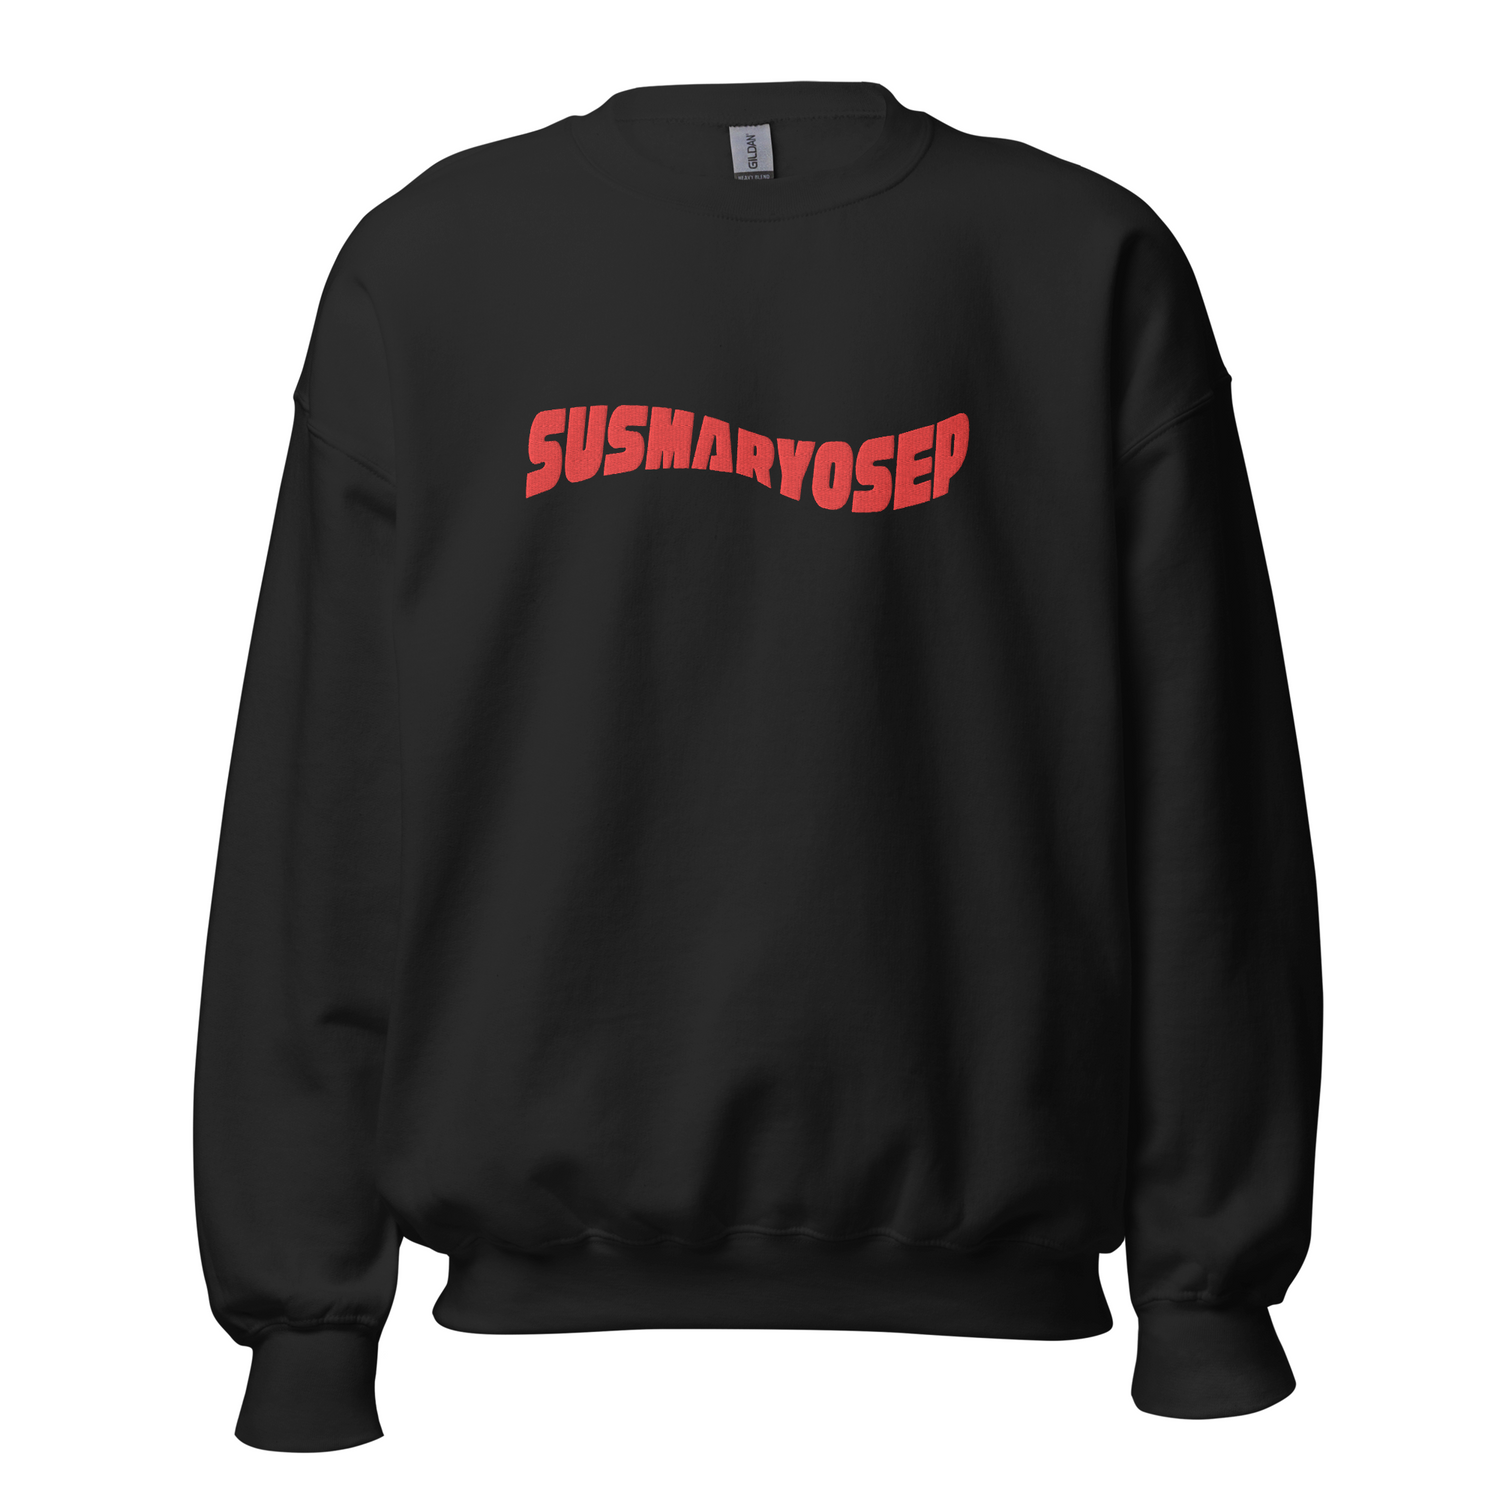 Filipino Sweatshirt Susmaryosep Embroidered Crew Neck in color variant Black